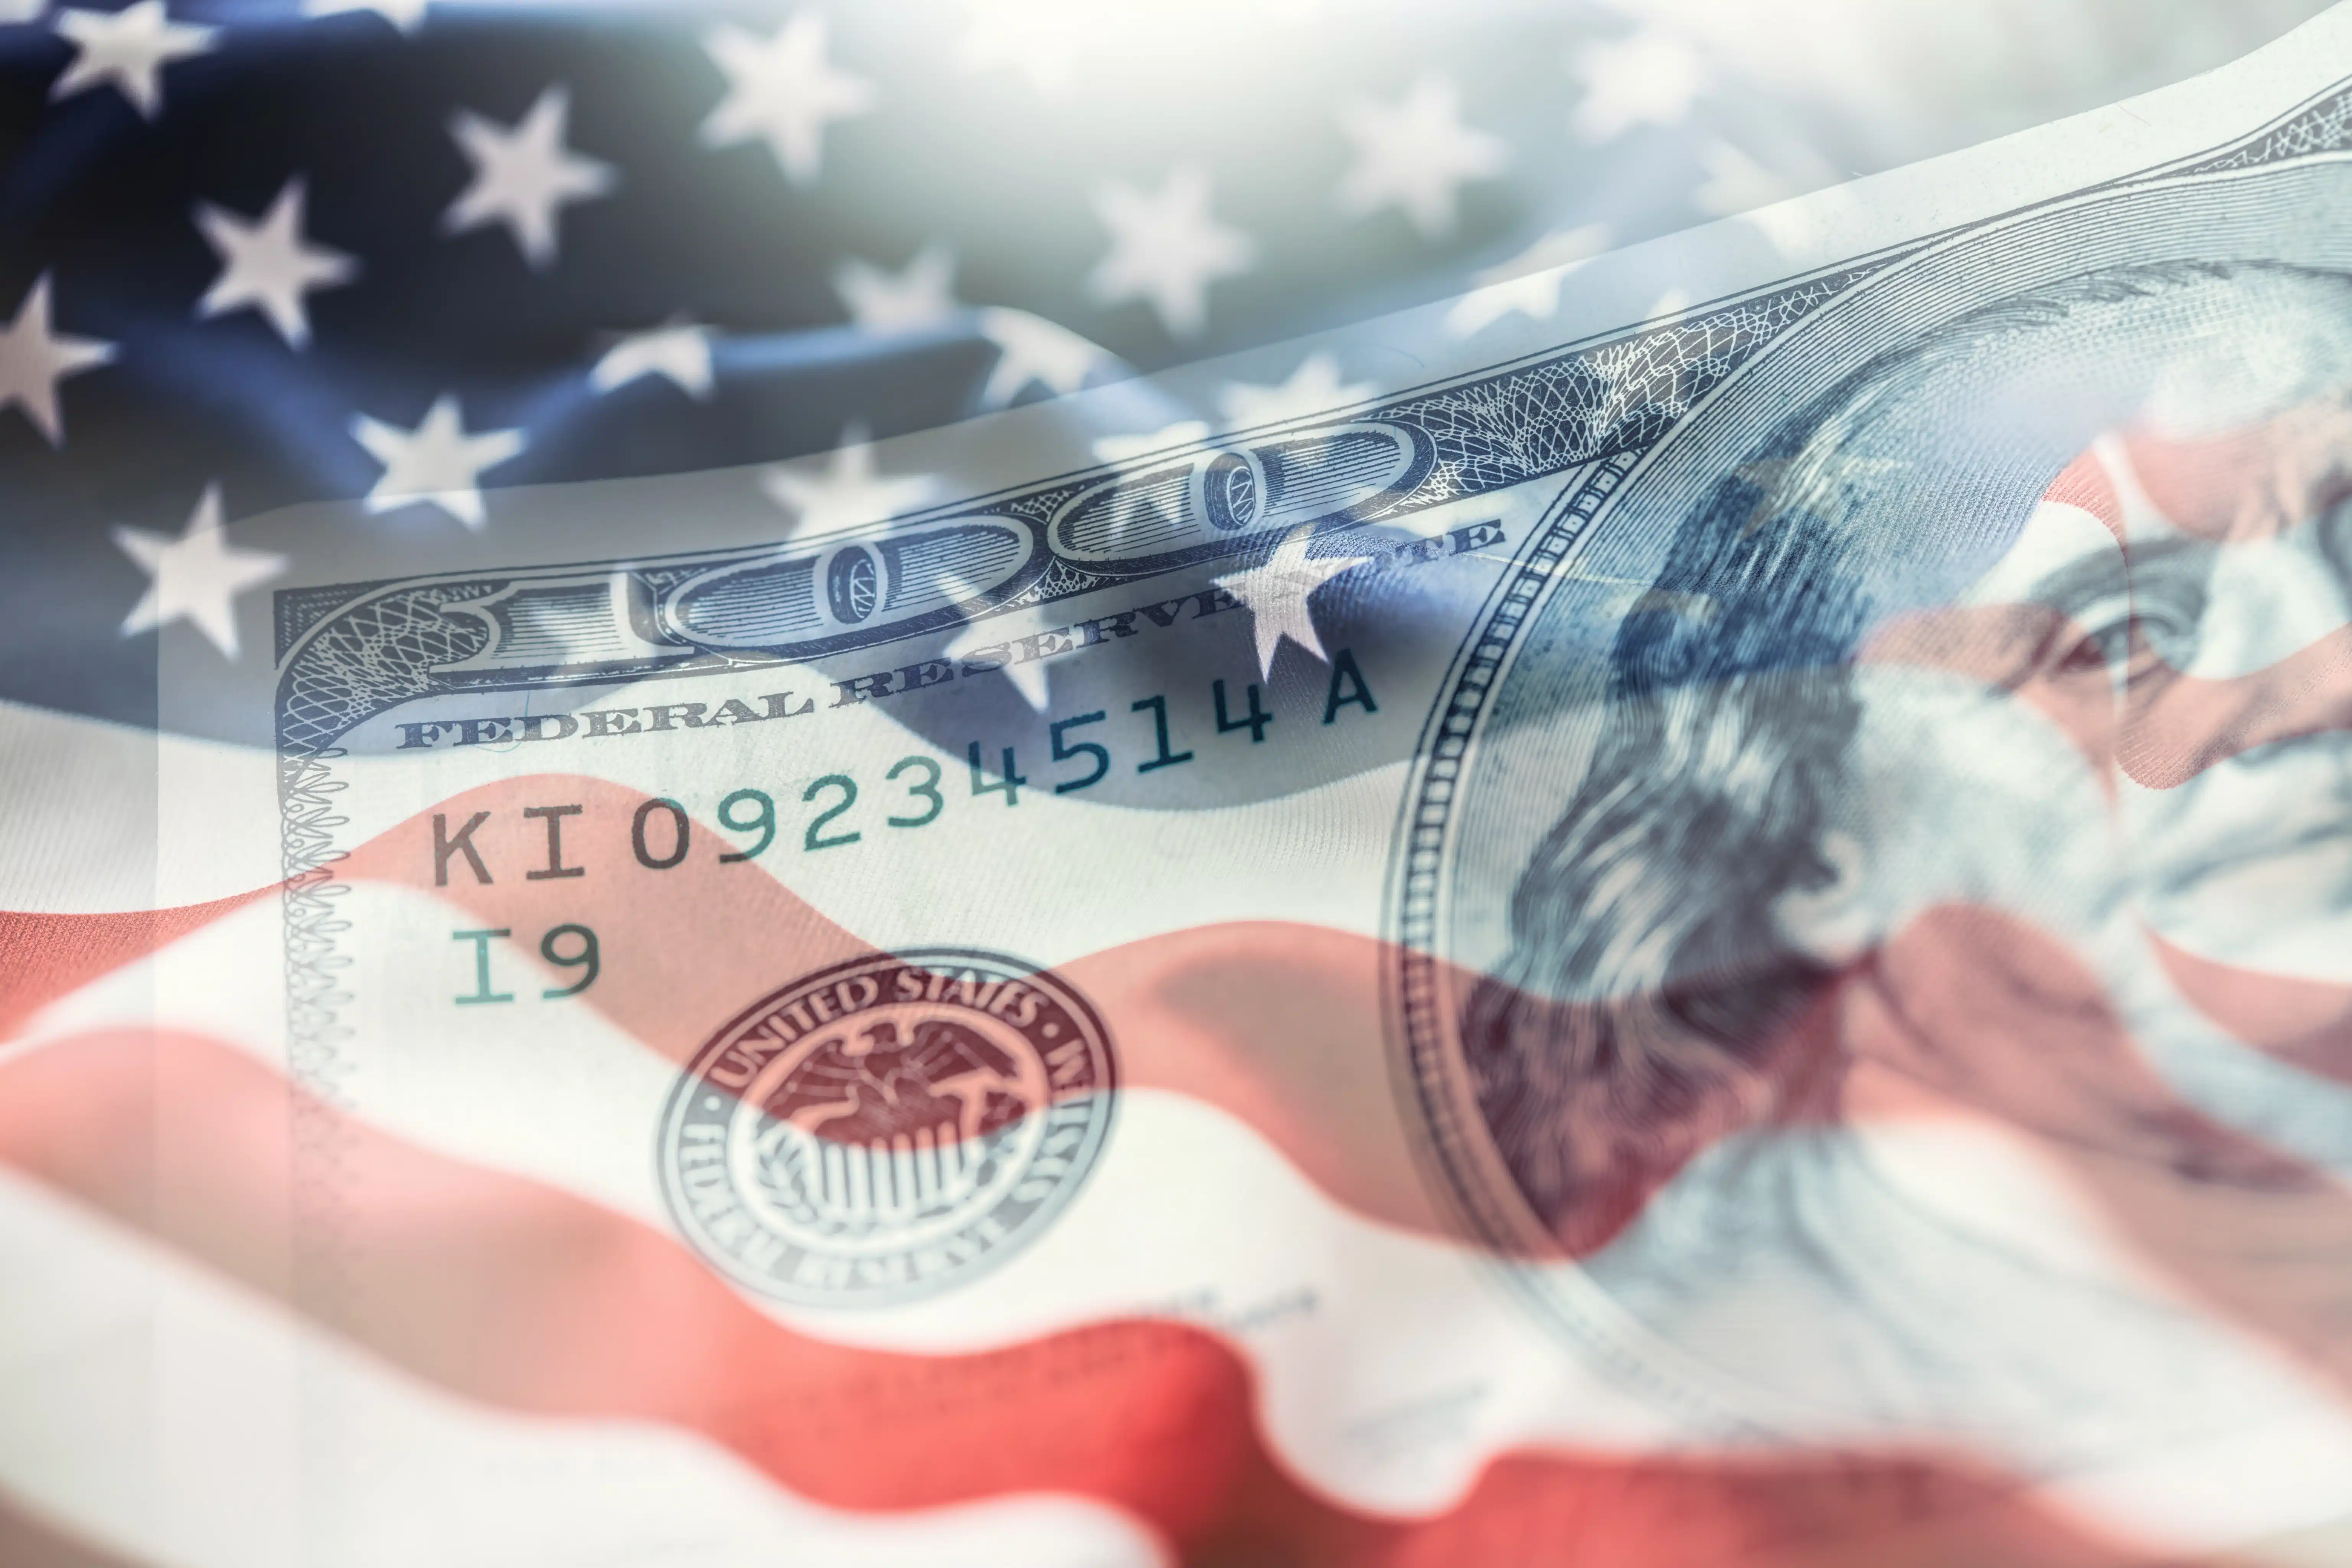 US flag overlaid on a $100 bill, symbolizing debt in America